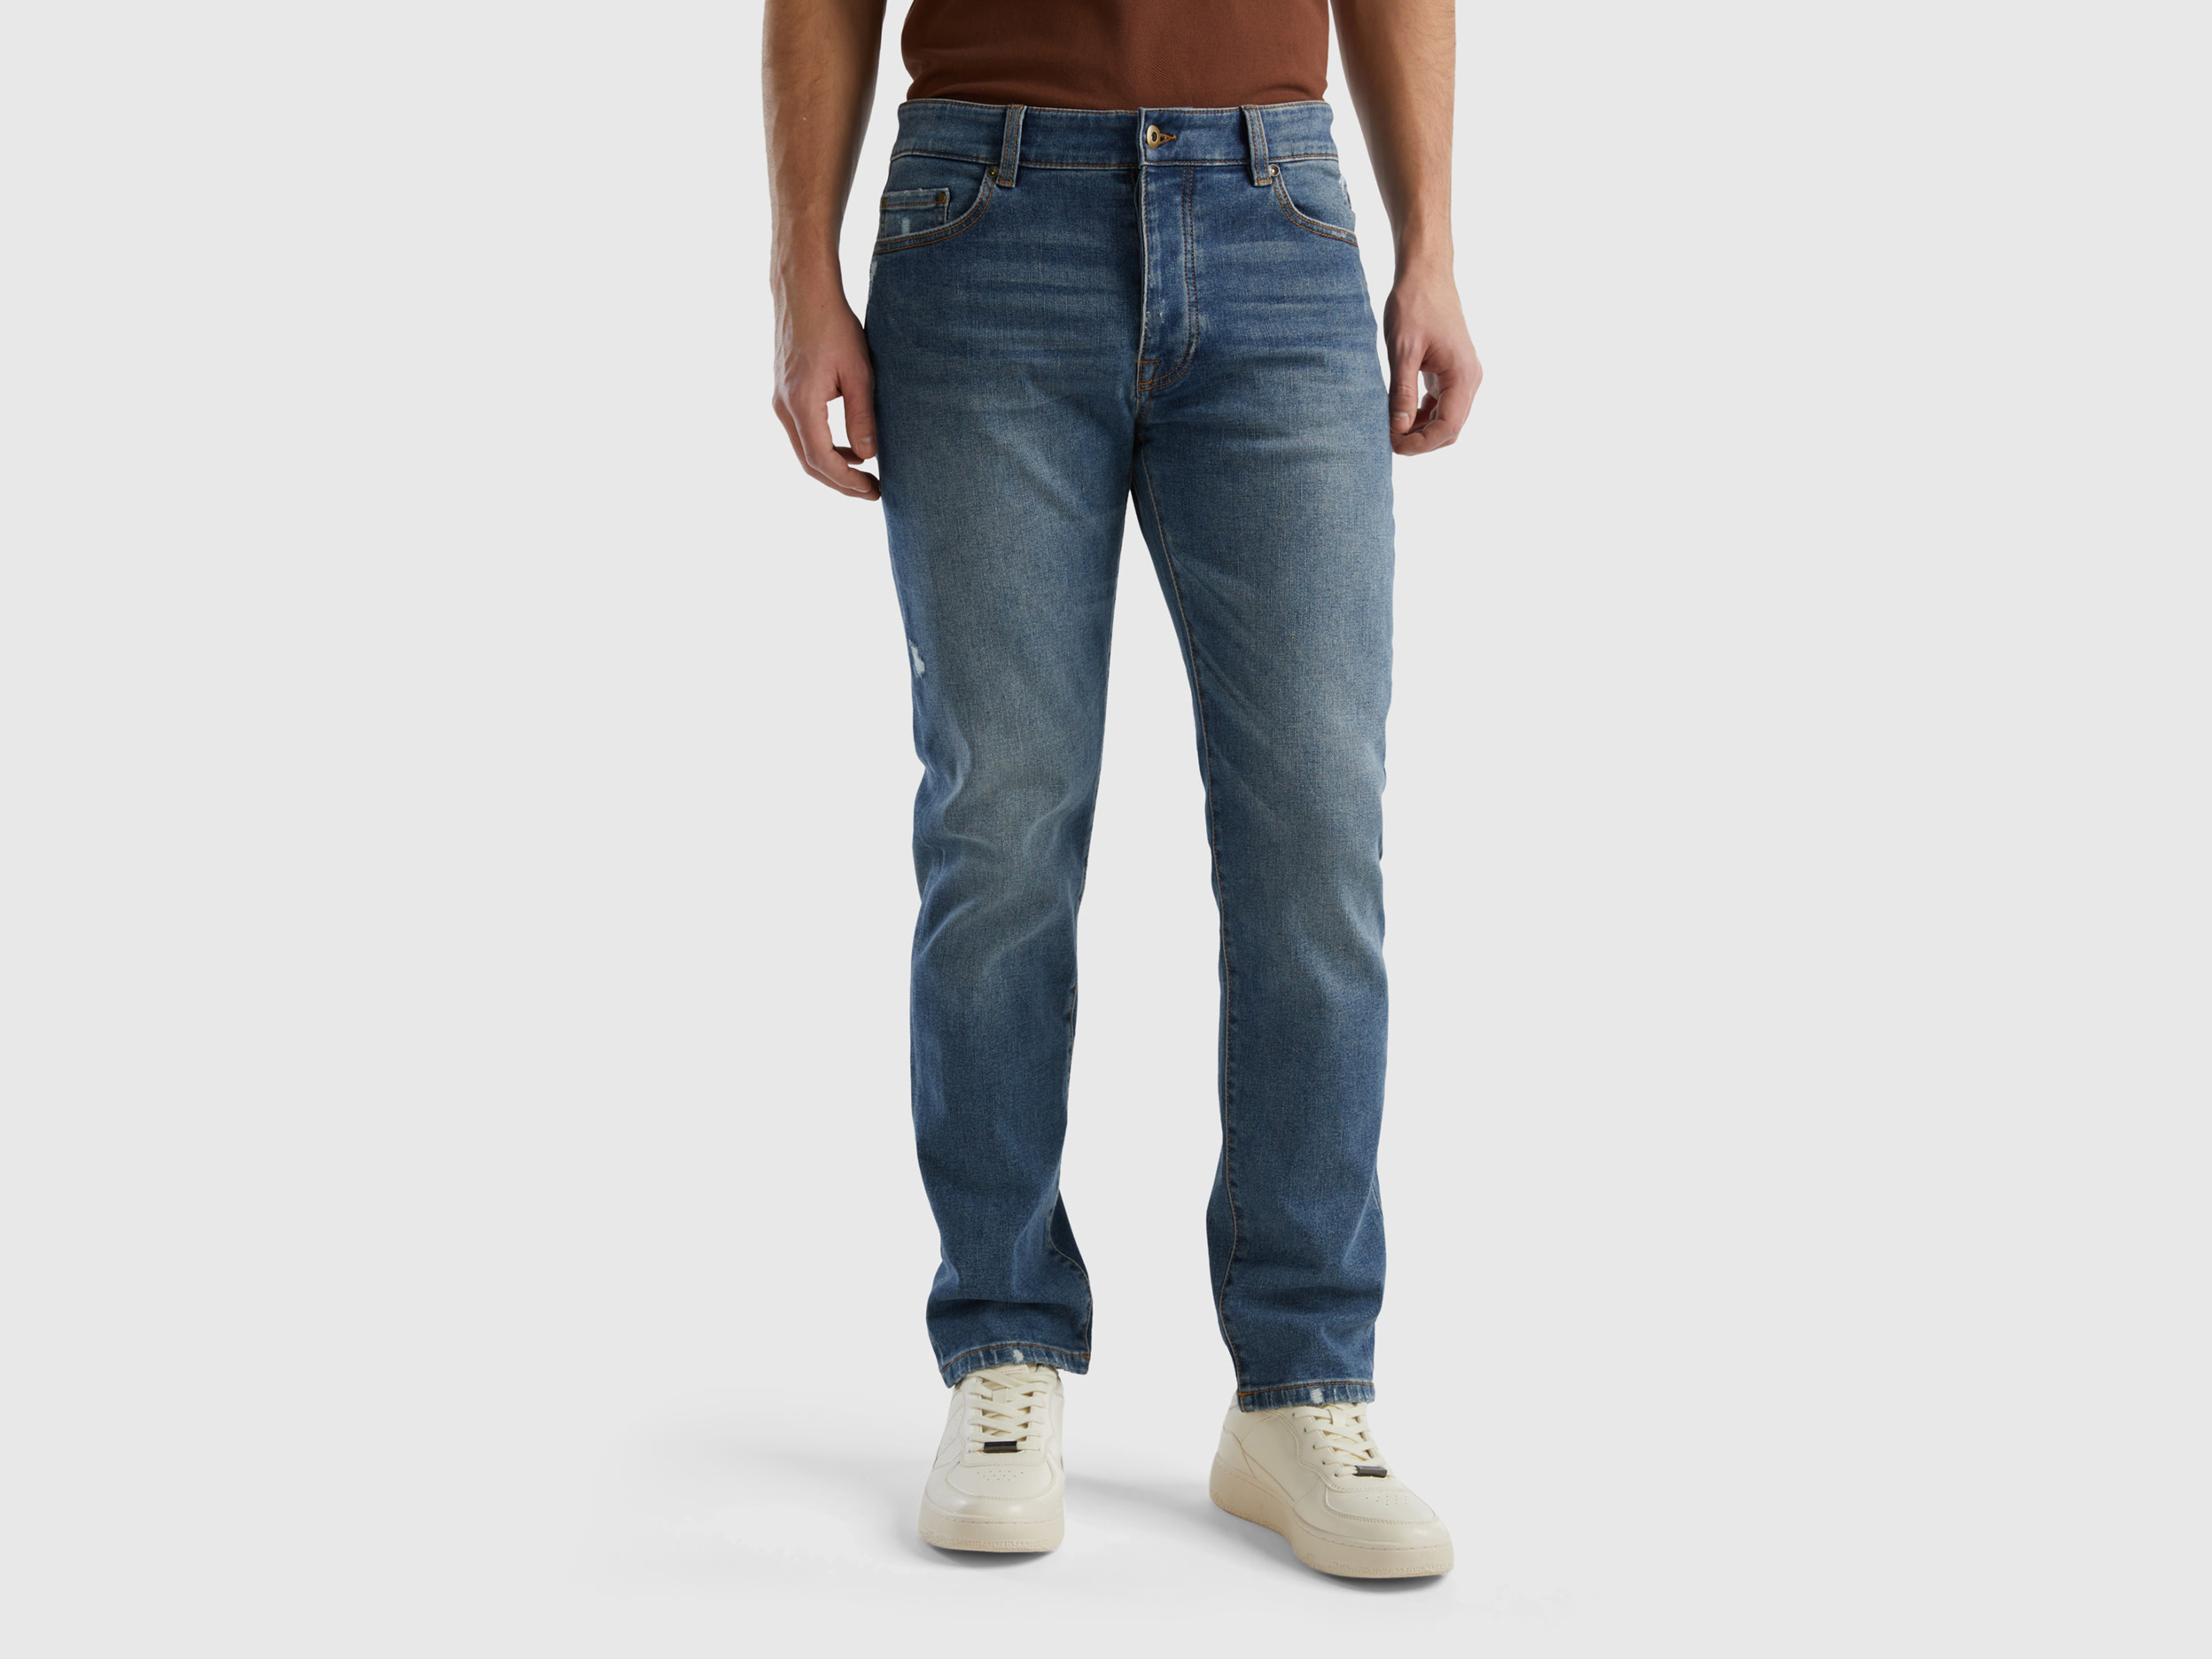 Benetton, Five Pocket Slim Fit Jeans, size 40, Dark Blue, Men